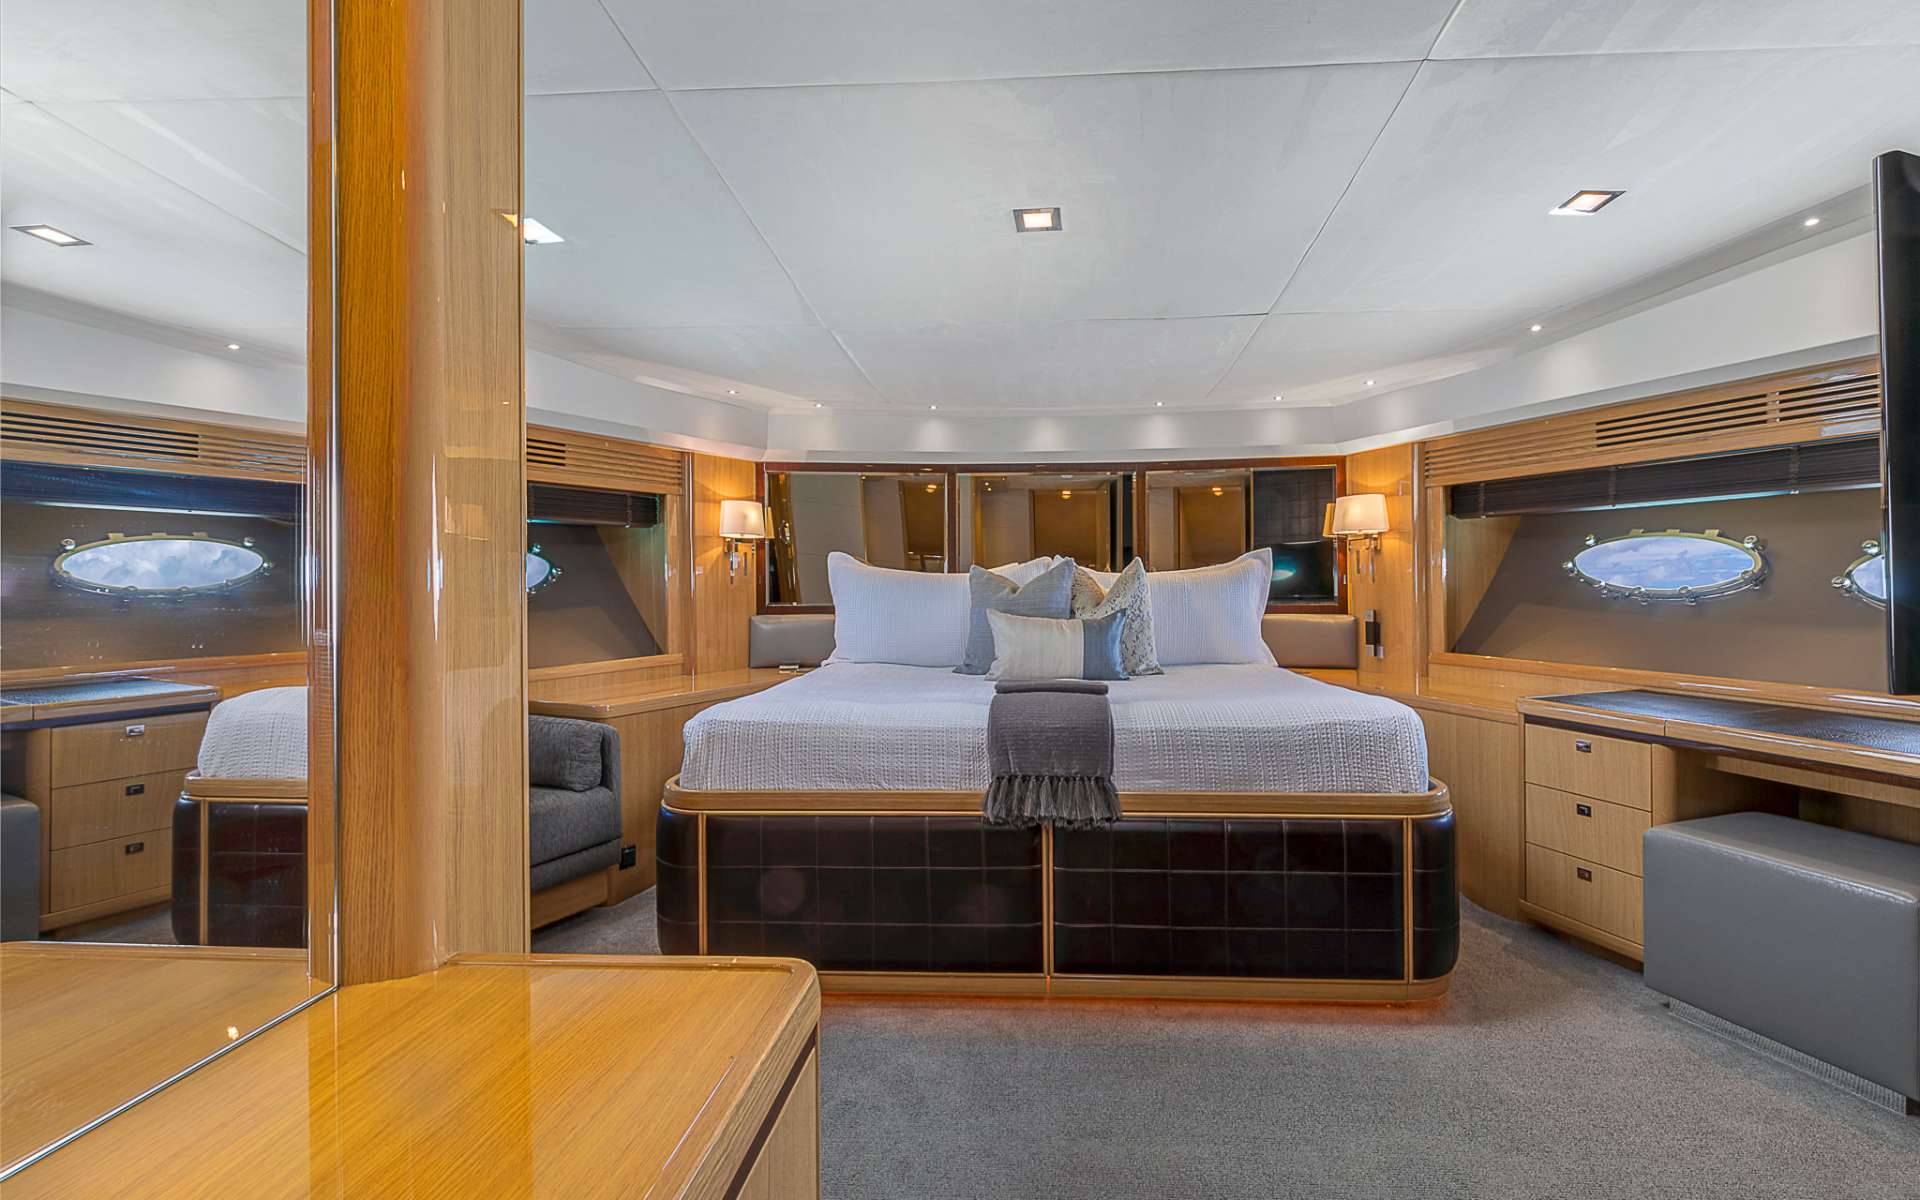 Motor Yacht 'LADY COPE' VIP, 8 PAX, 4 Crew, 98.00 Ft, 29.00 Meters, Built 2012, Princess, UK, Refit Year 2016